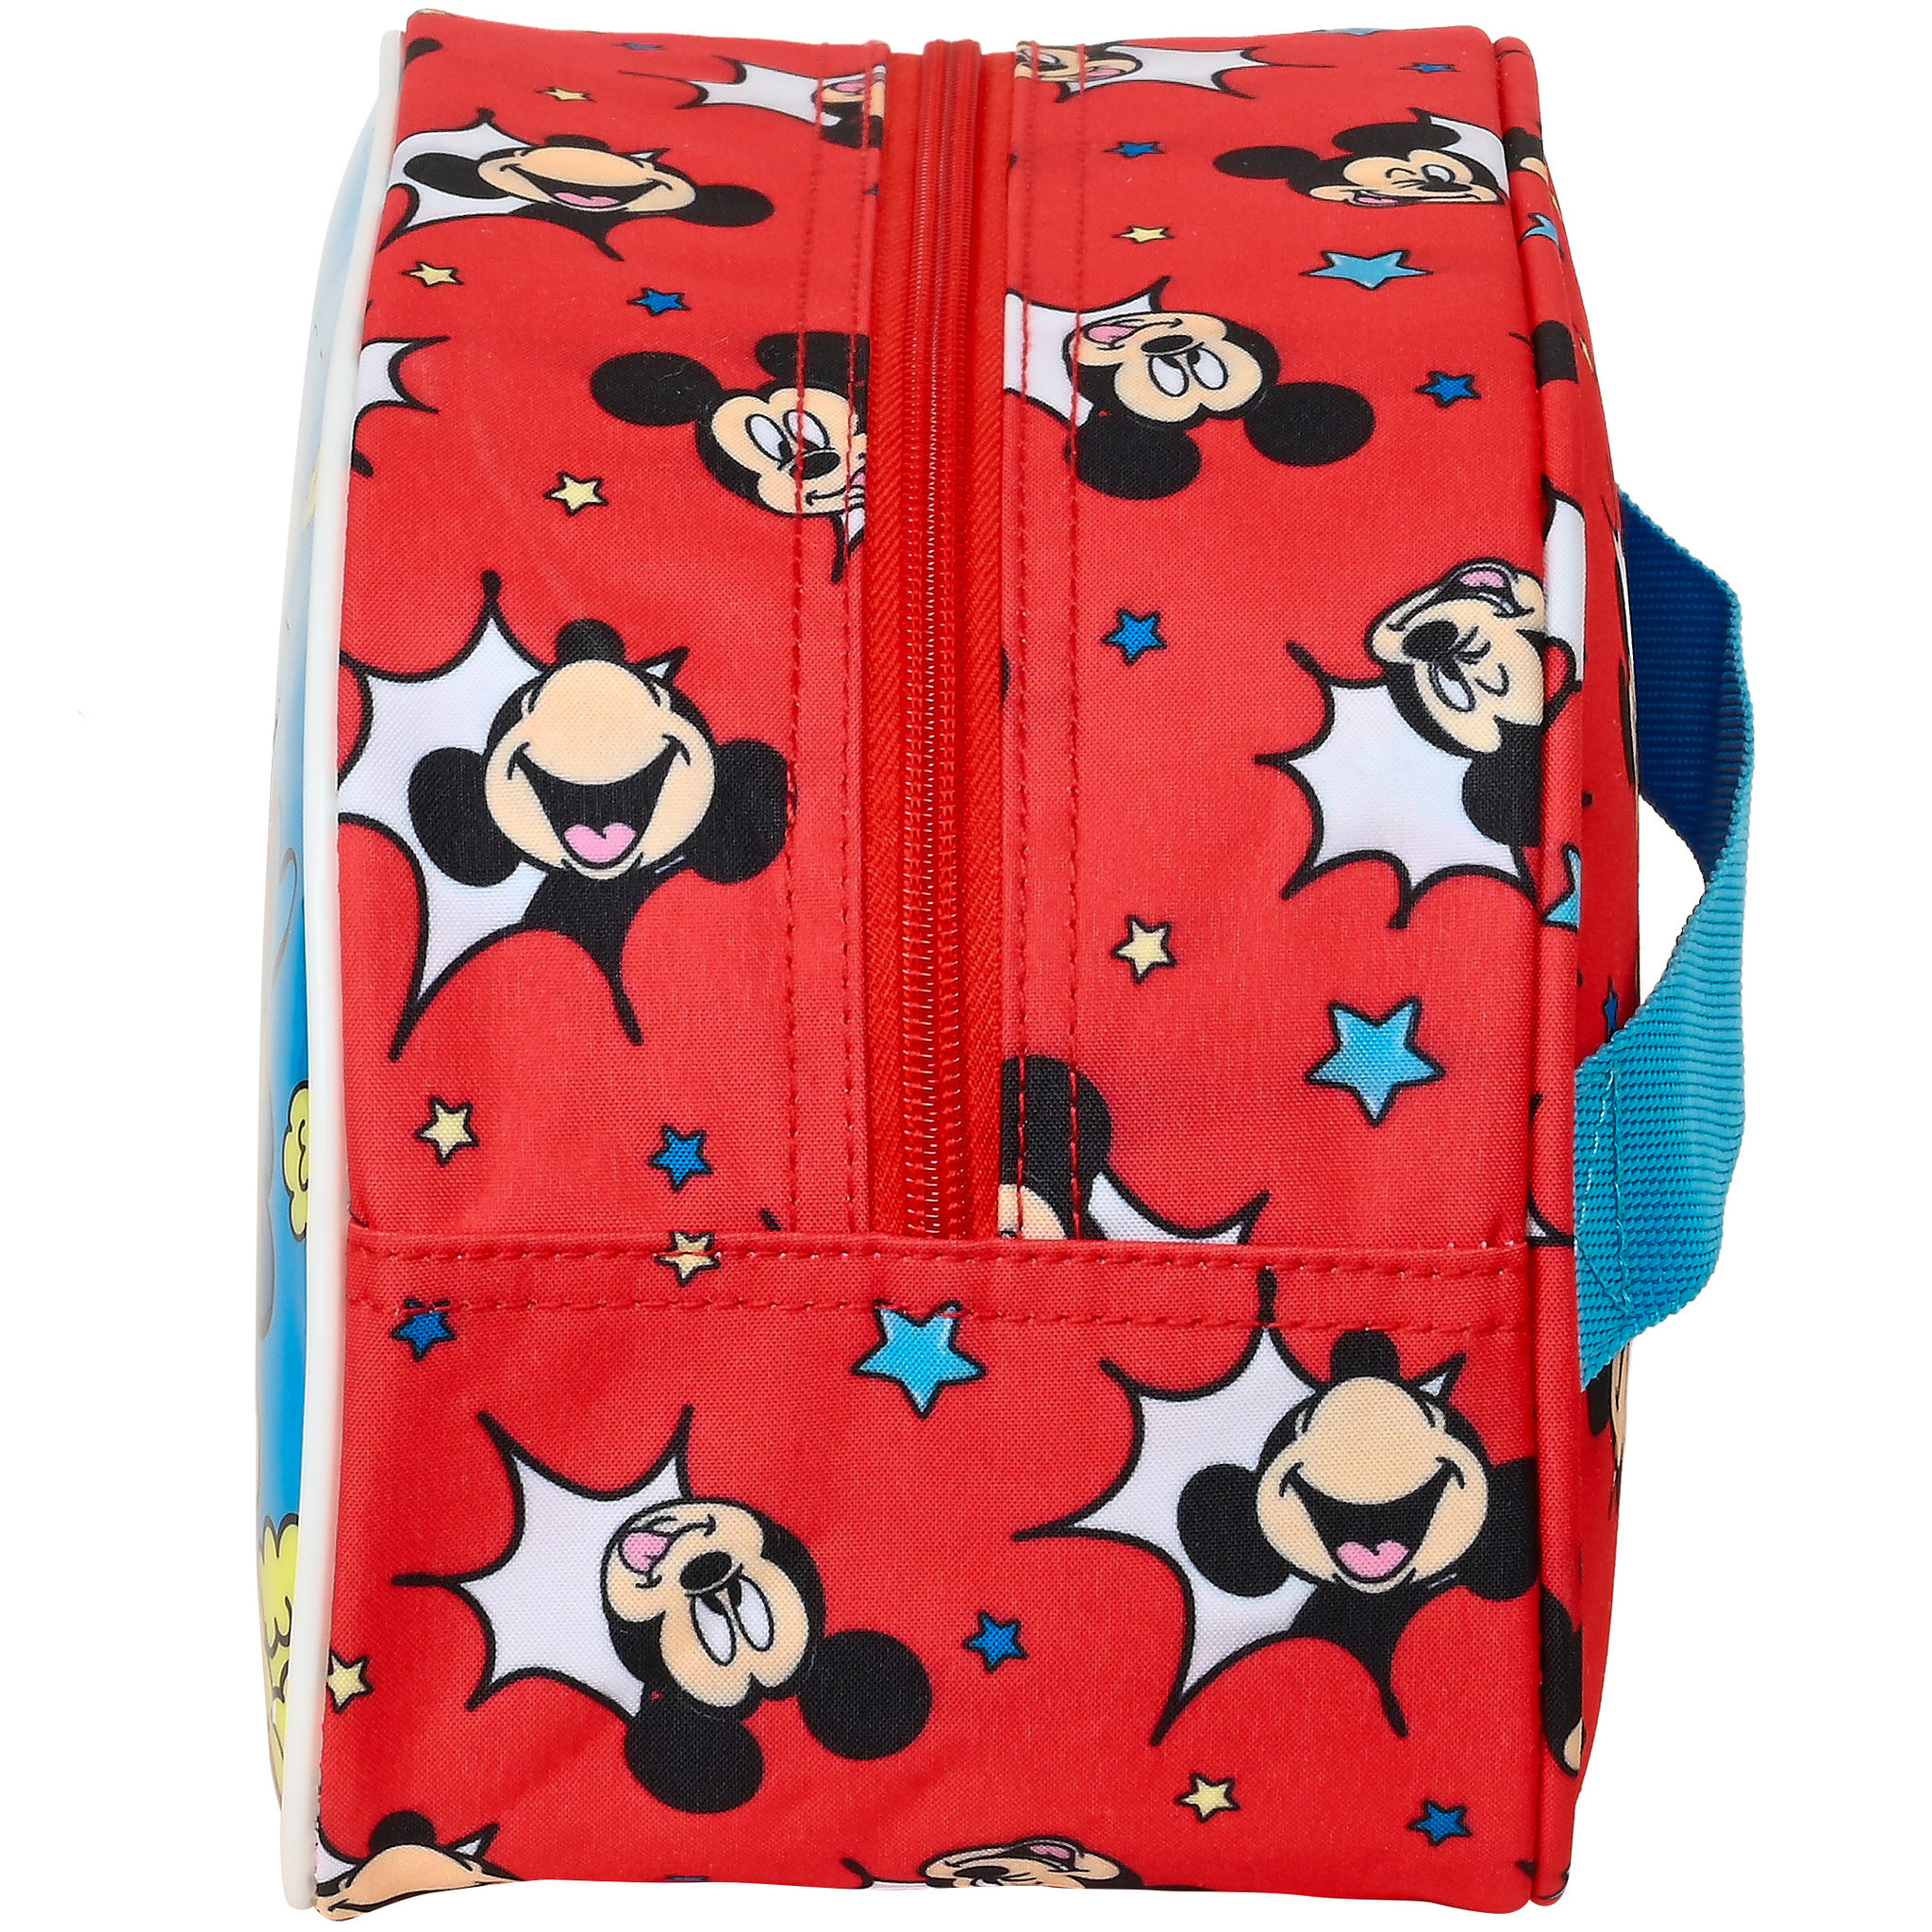 Disney Mickey Mouse Toiletry bag, Happy Smiles - 26 x 15 x 12 cm - Polyester